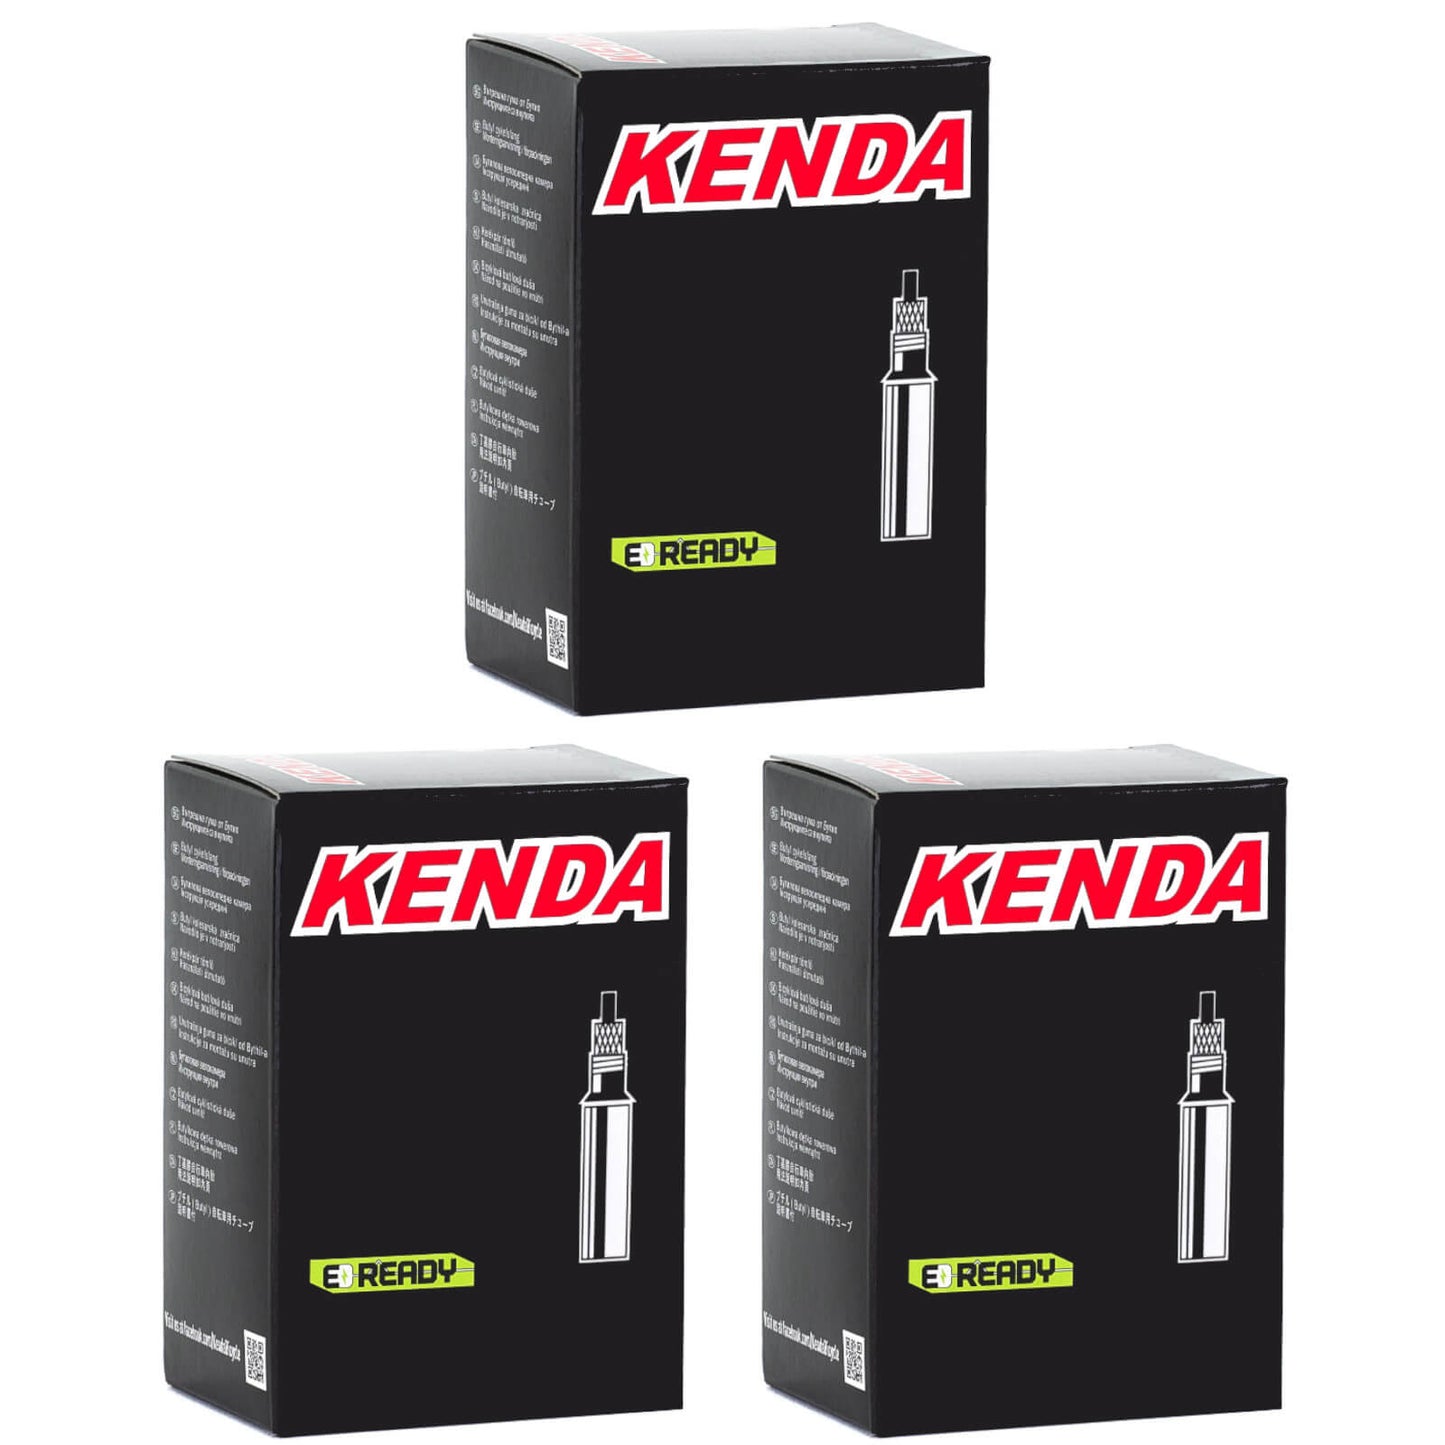 Kenda 27.5x1.5-1.95" 27.5 Inch Presta Valve Bike Inner Tube Pack of 3